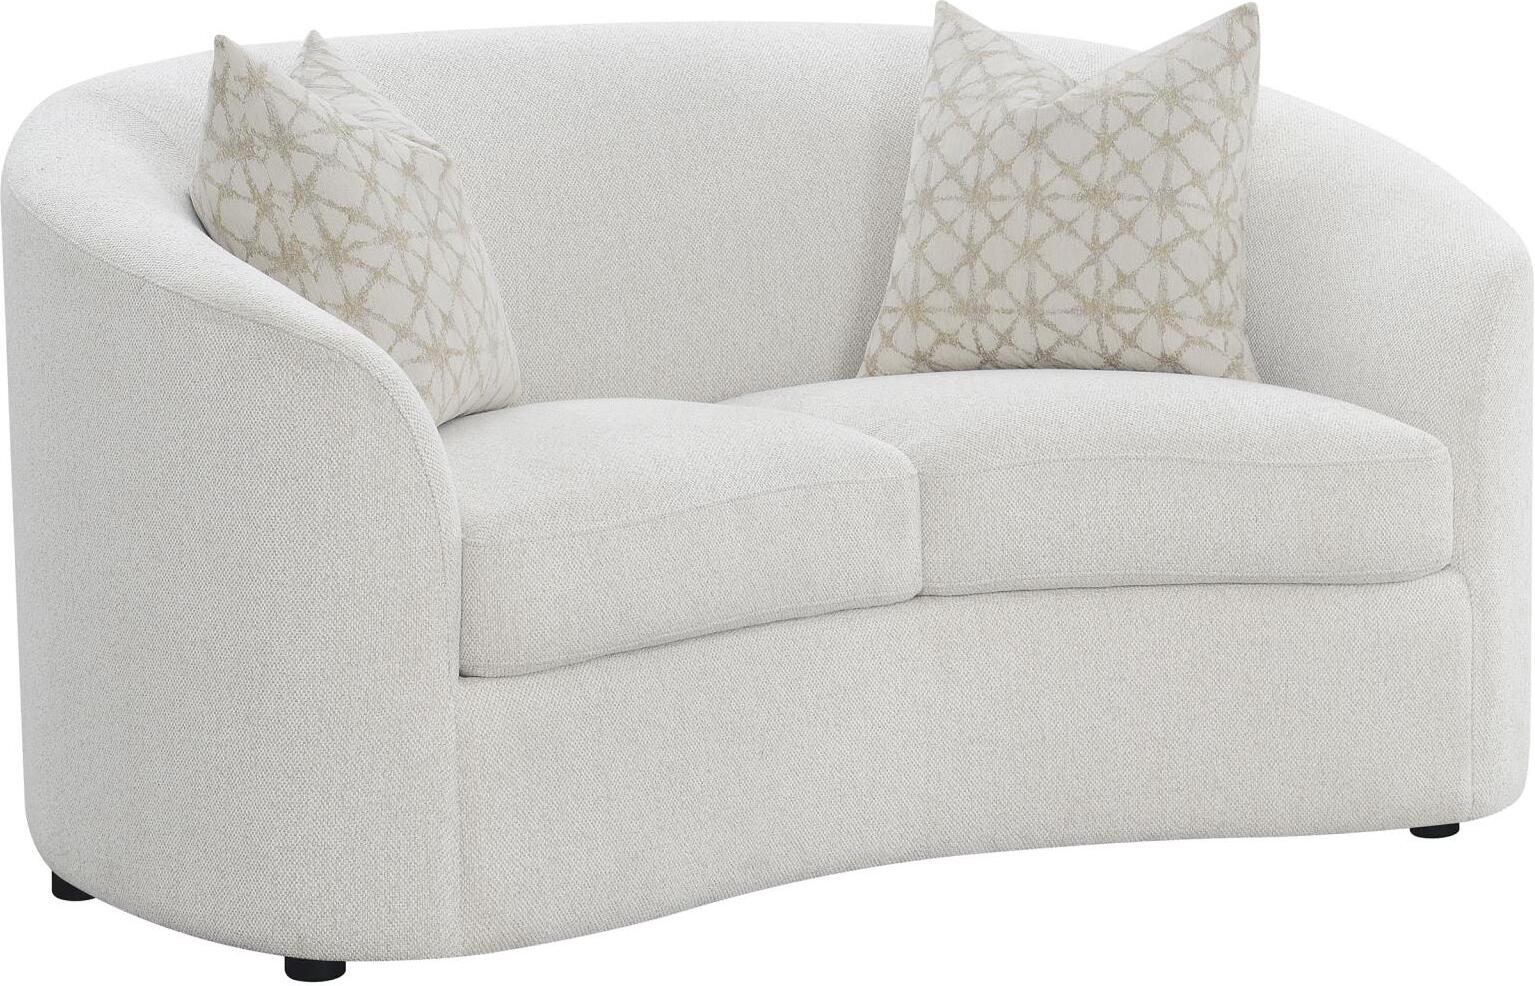 Sofa Backrests: Tufted Back vs Pillow Back vs Tight Back